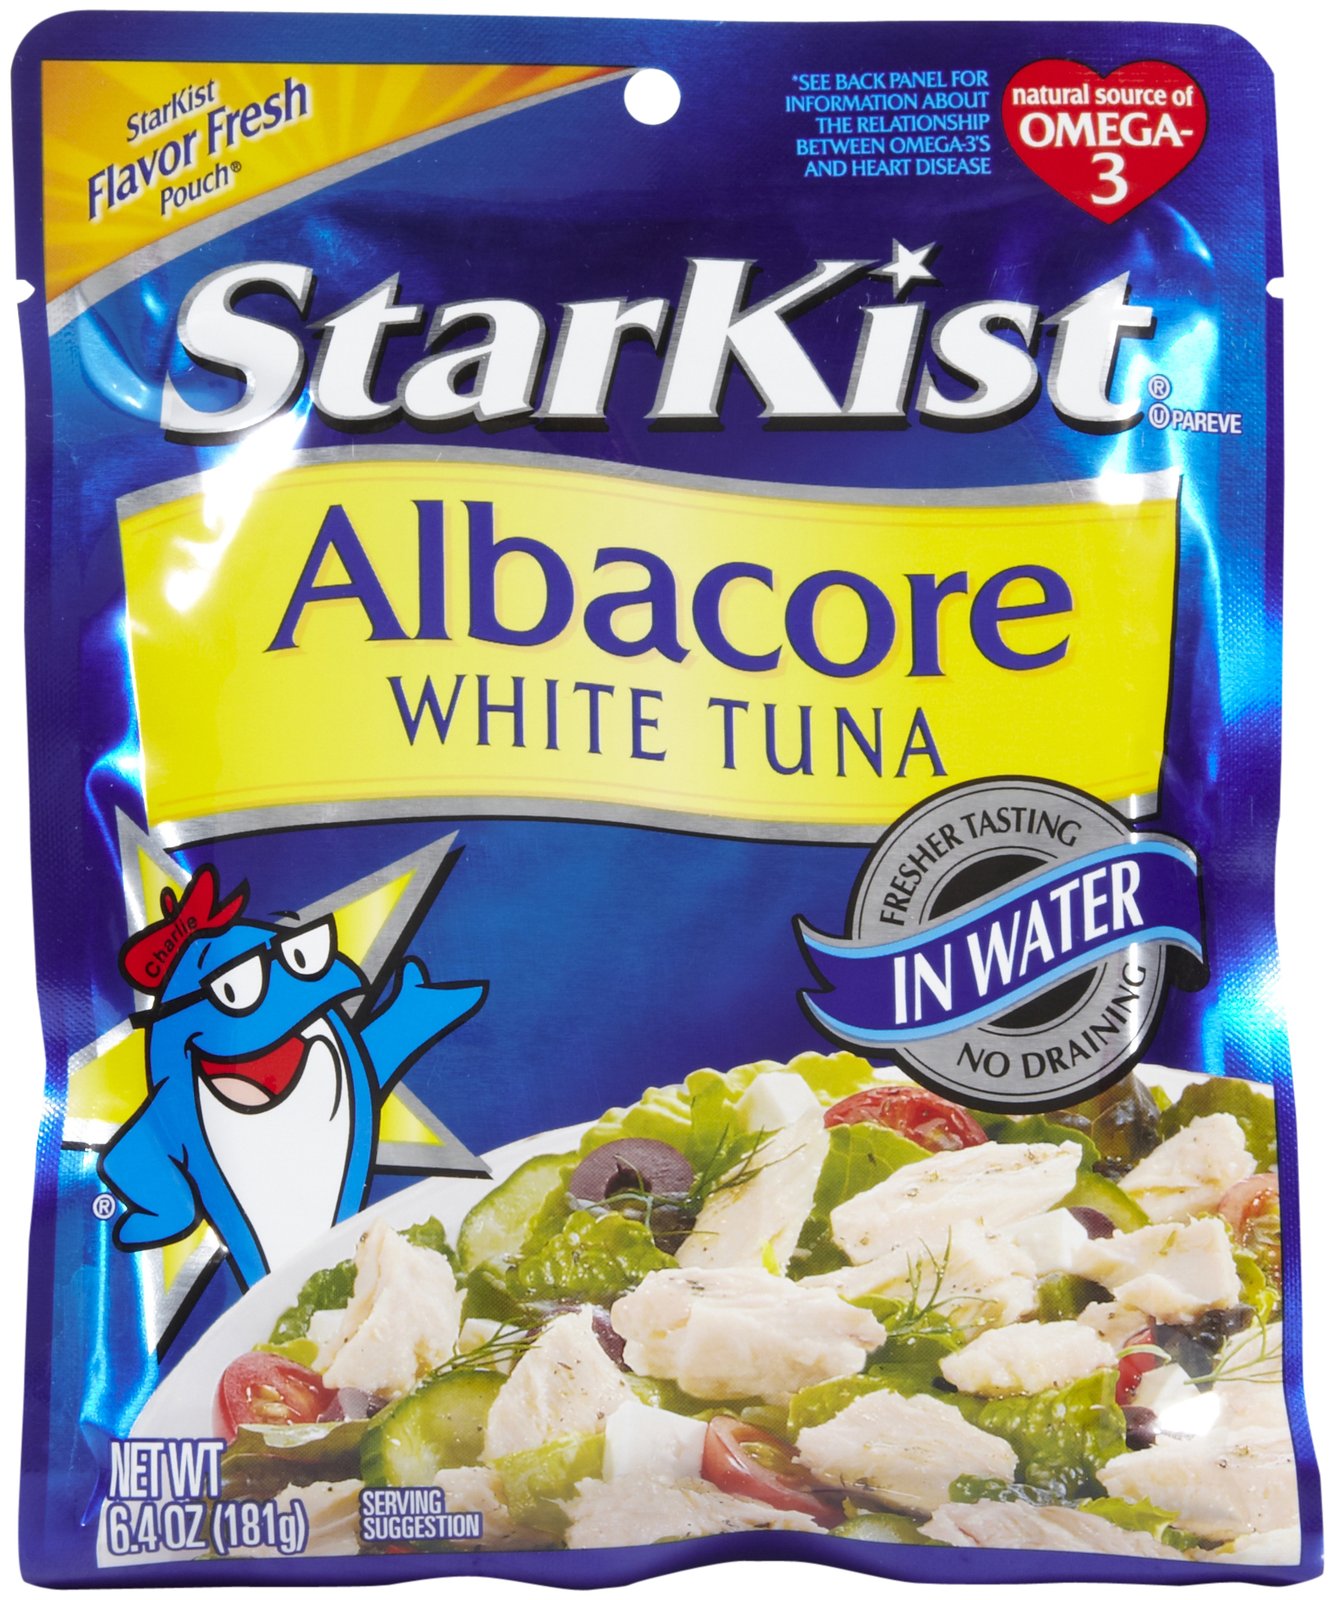 Publix Hot Deal Alert! StarKist Albacore White Tuna Only $1.30 Until 11/5